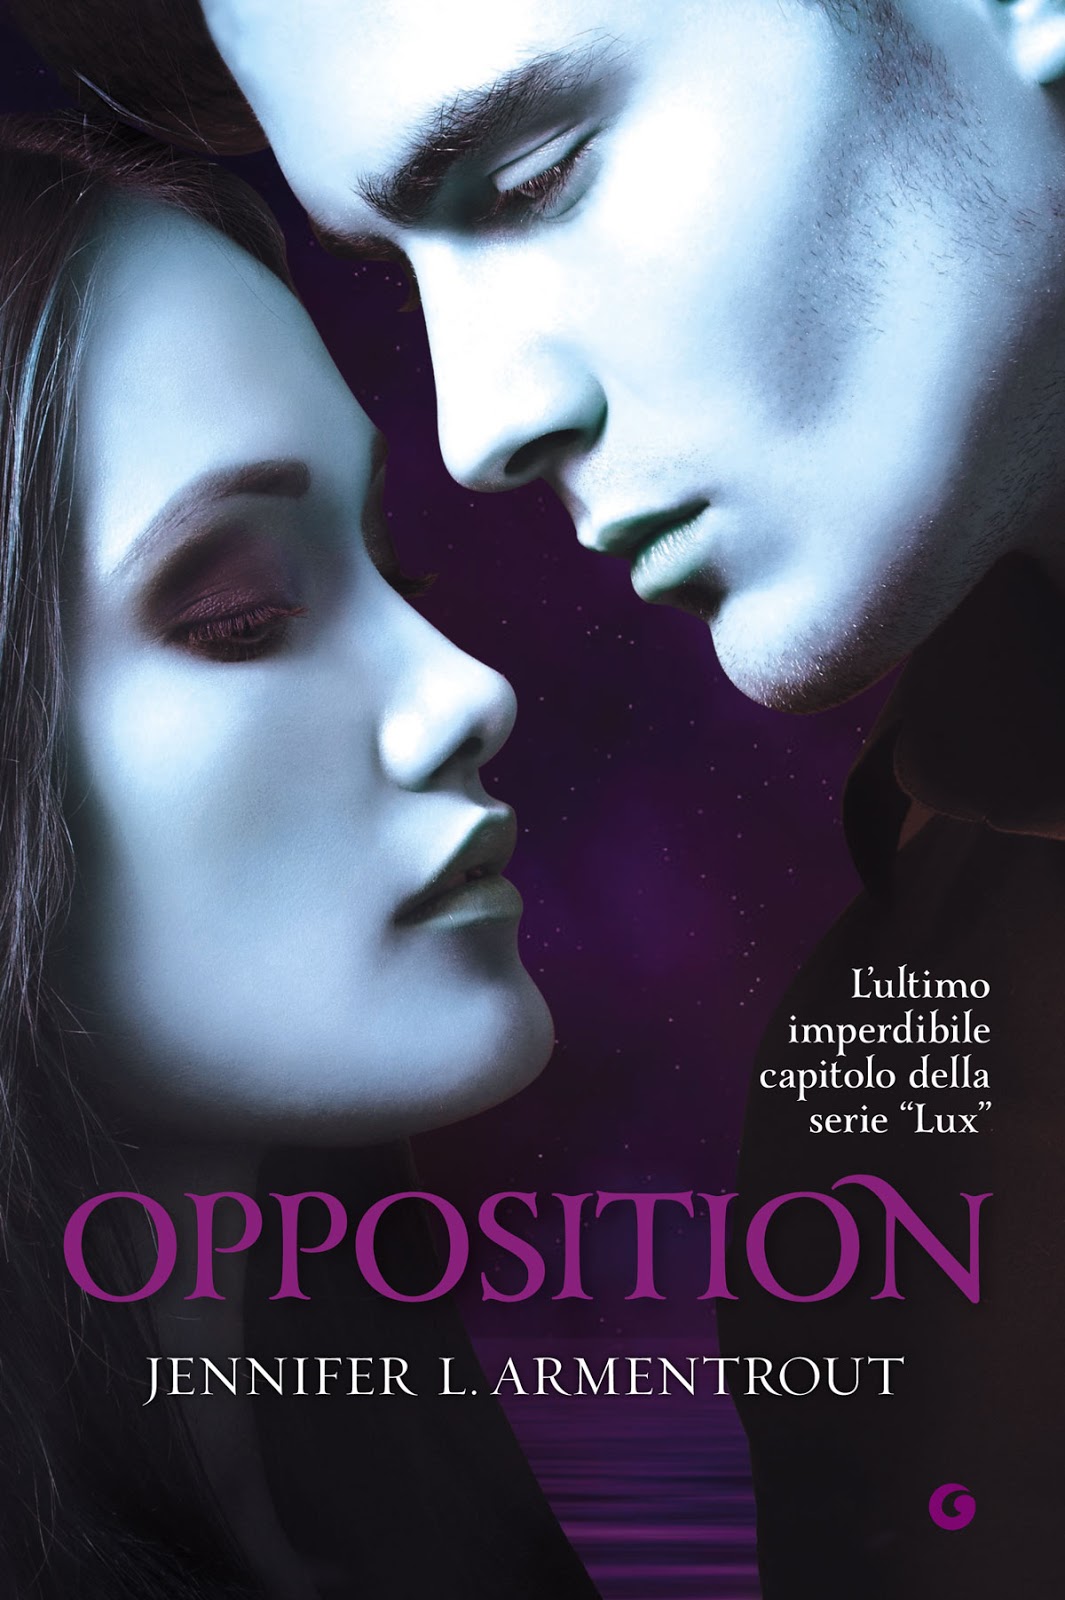 trama del libro Opposition